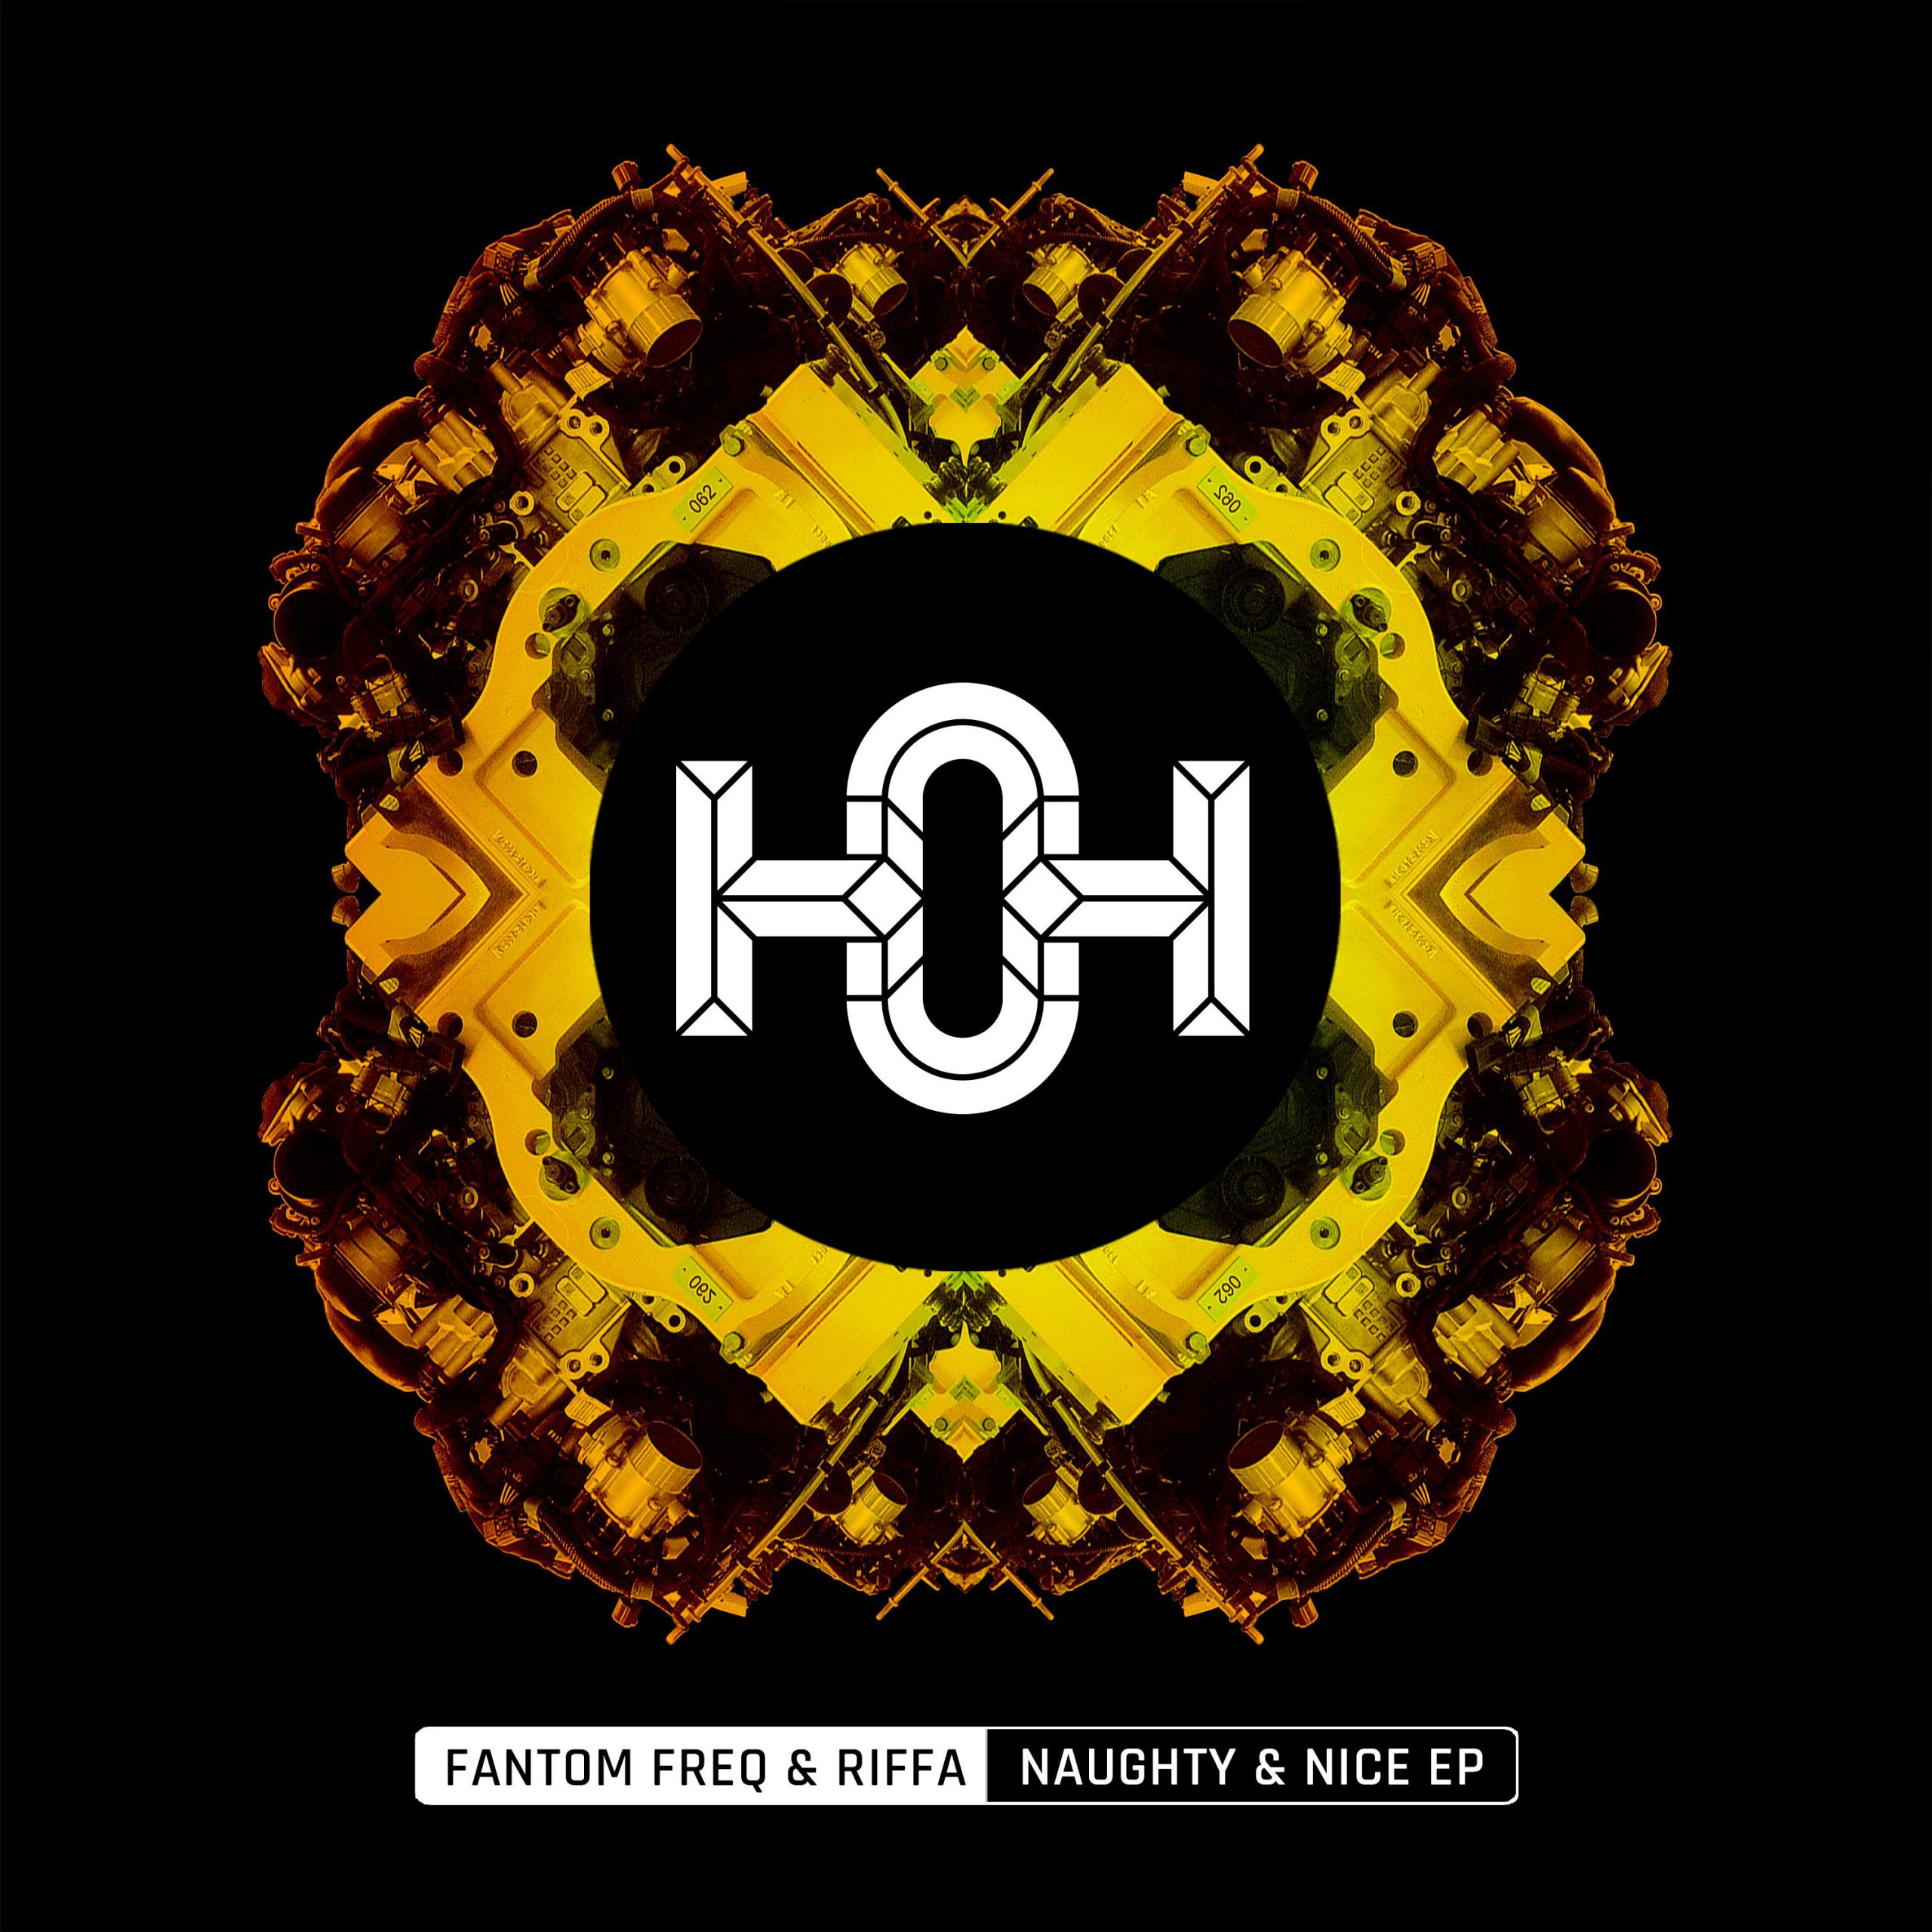 Fantom Freq & Riffa - Naughty & Nice EP